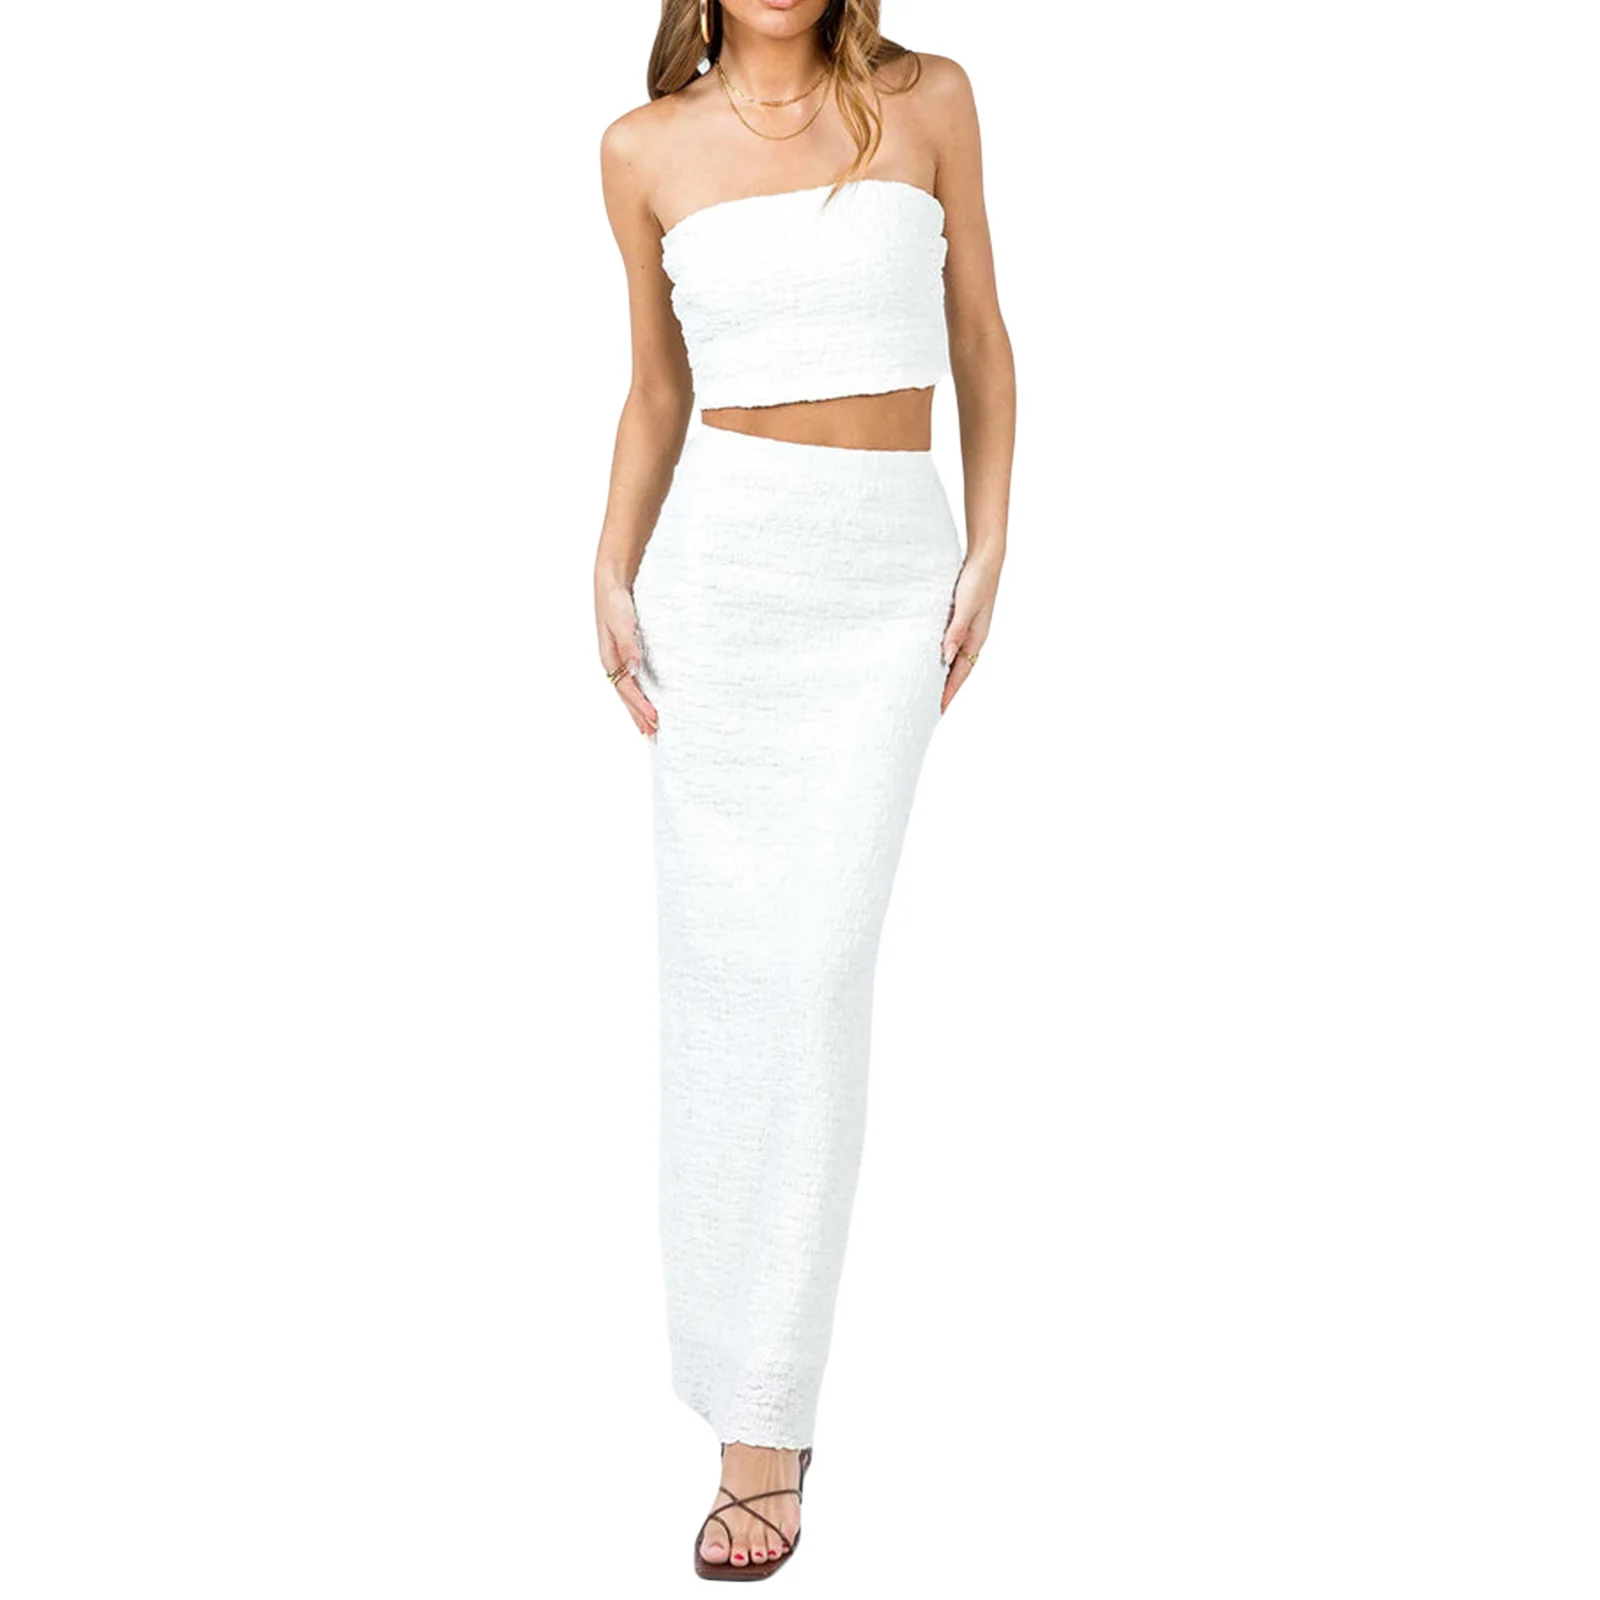 2023 New Summer Fashion Hot Sale Women Tops Skirt Set Sleeveless Off Shoulder Solid Color Crop Vest + Wrapped Long Half Dress